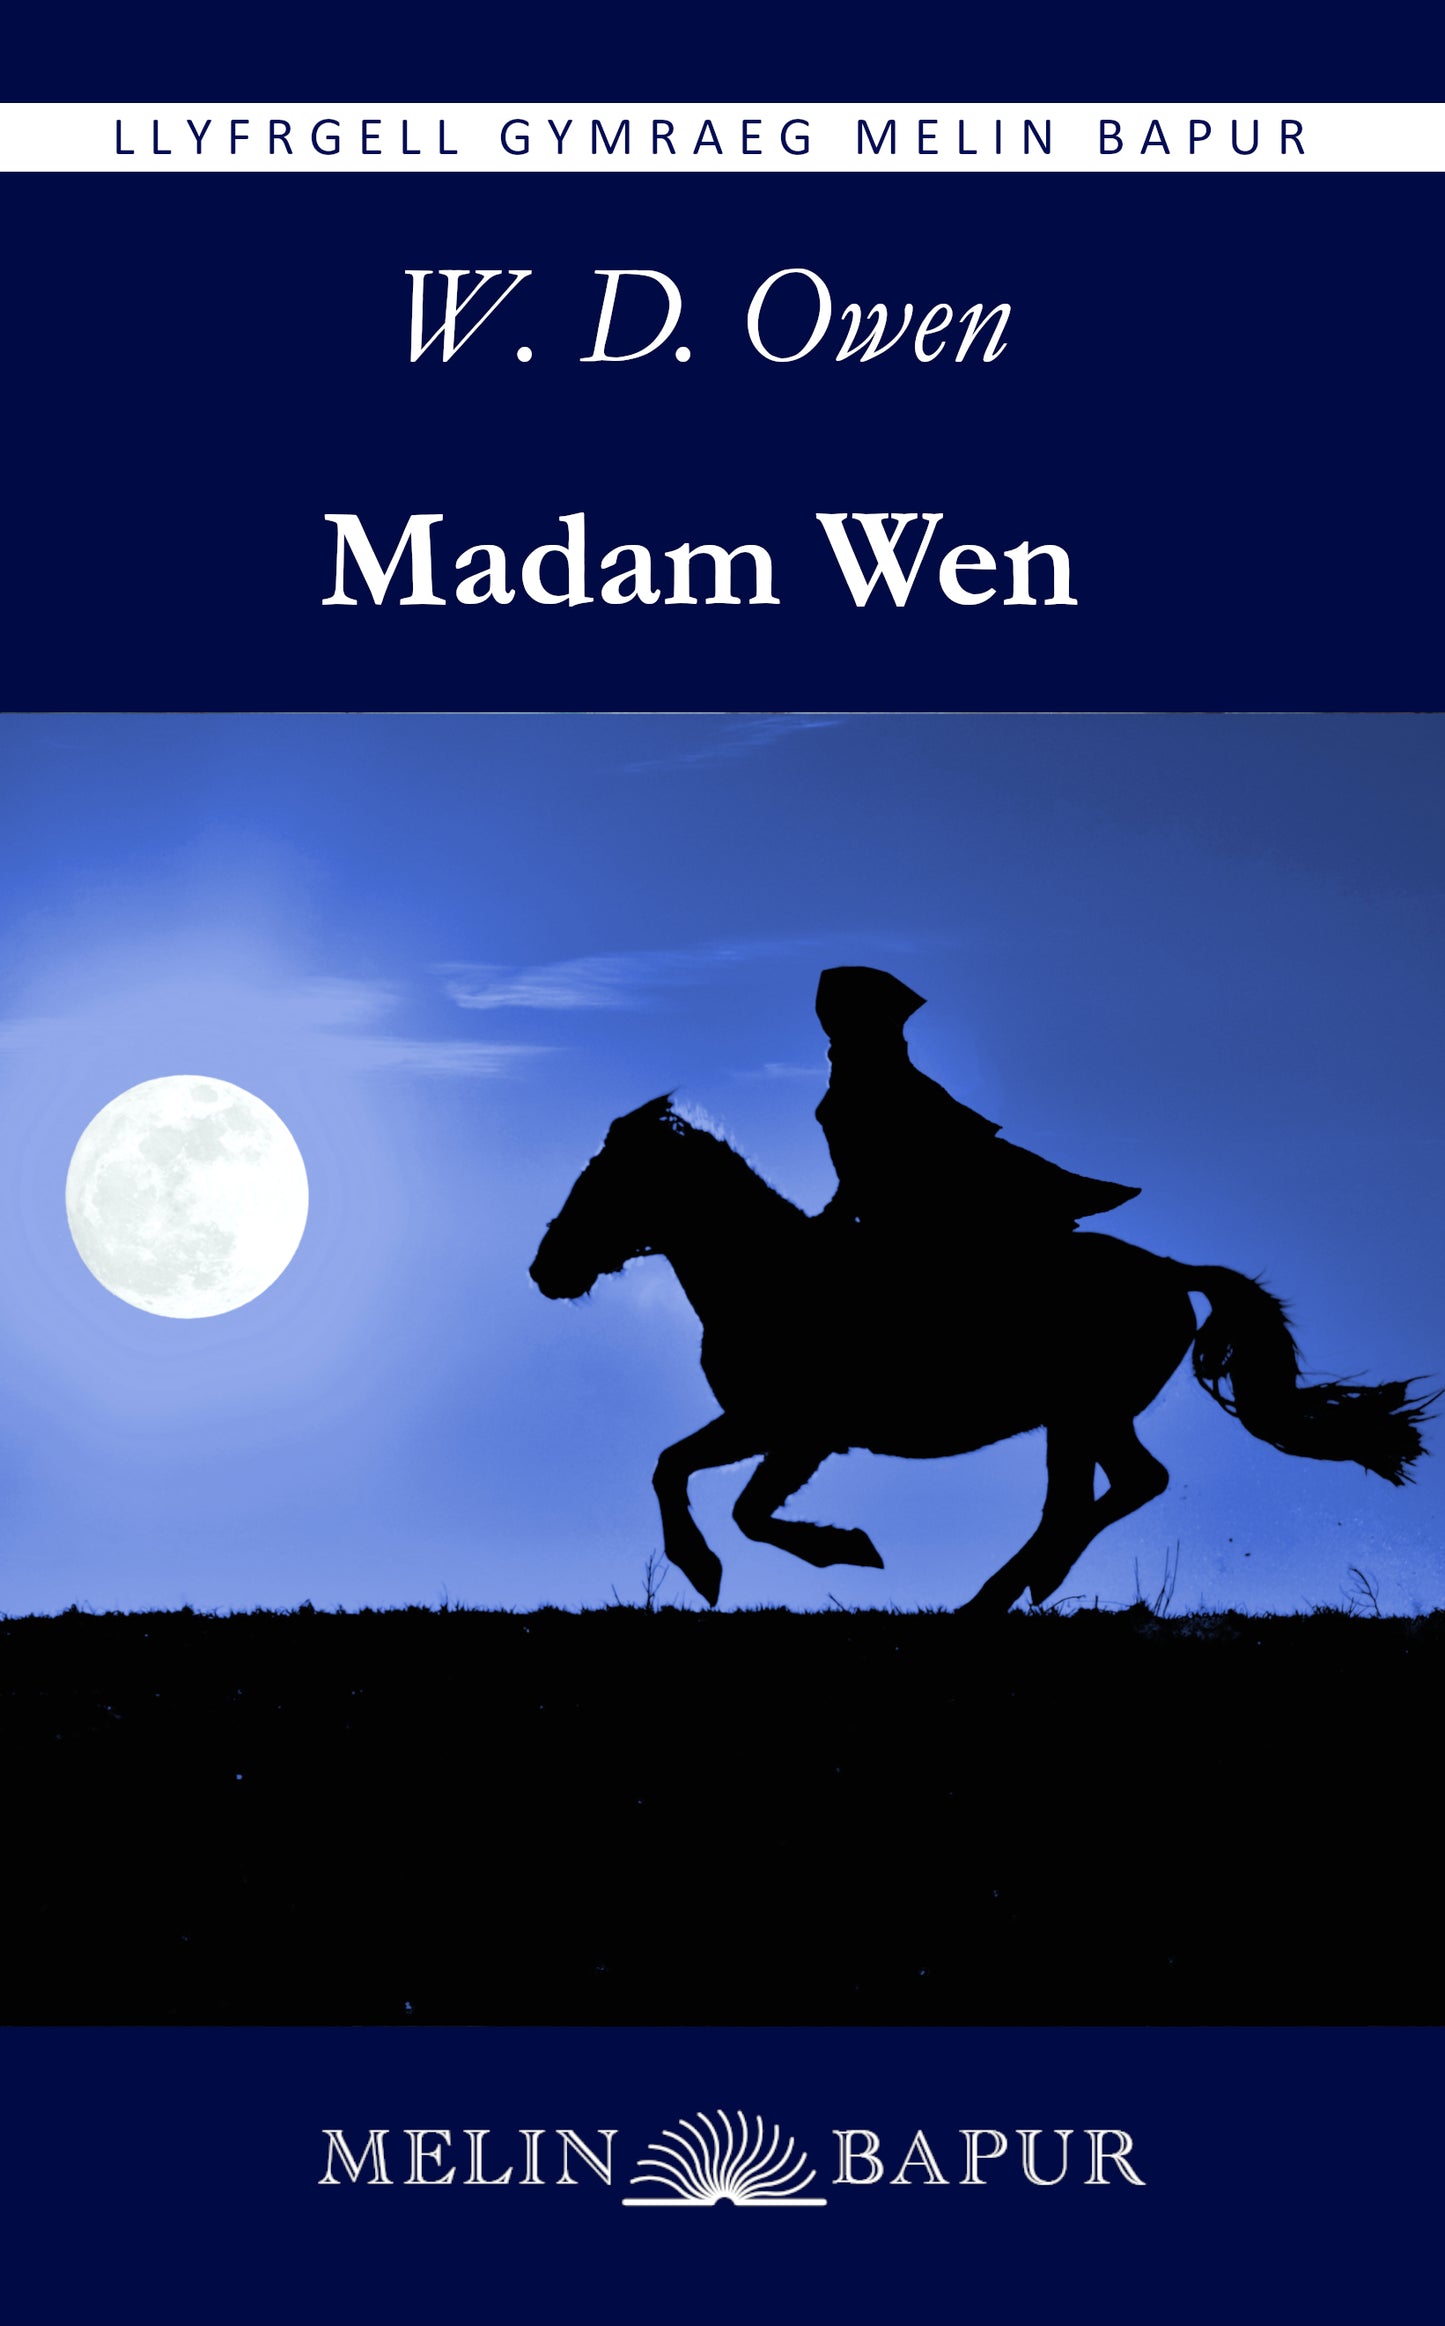 Madam Wen (W. D. Owen)